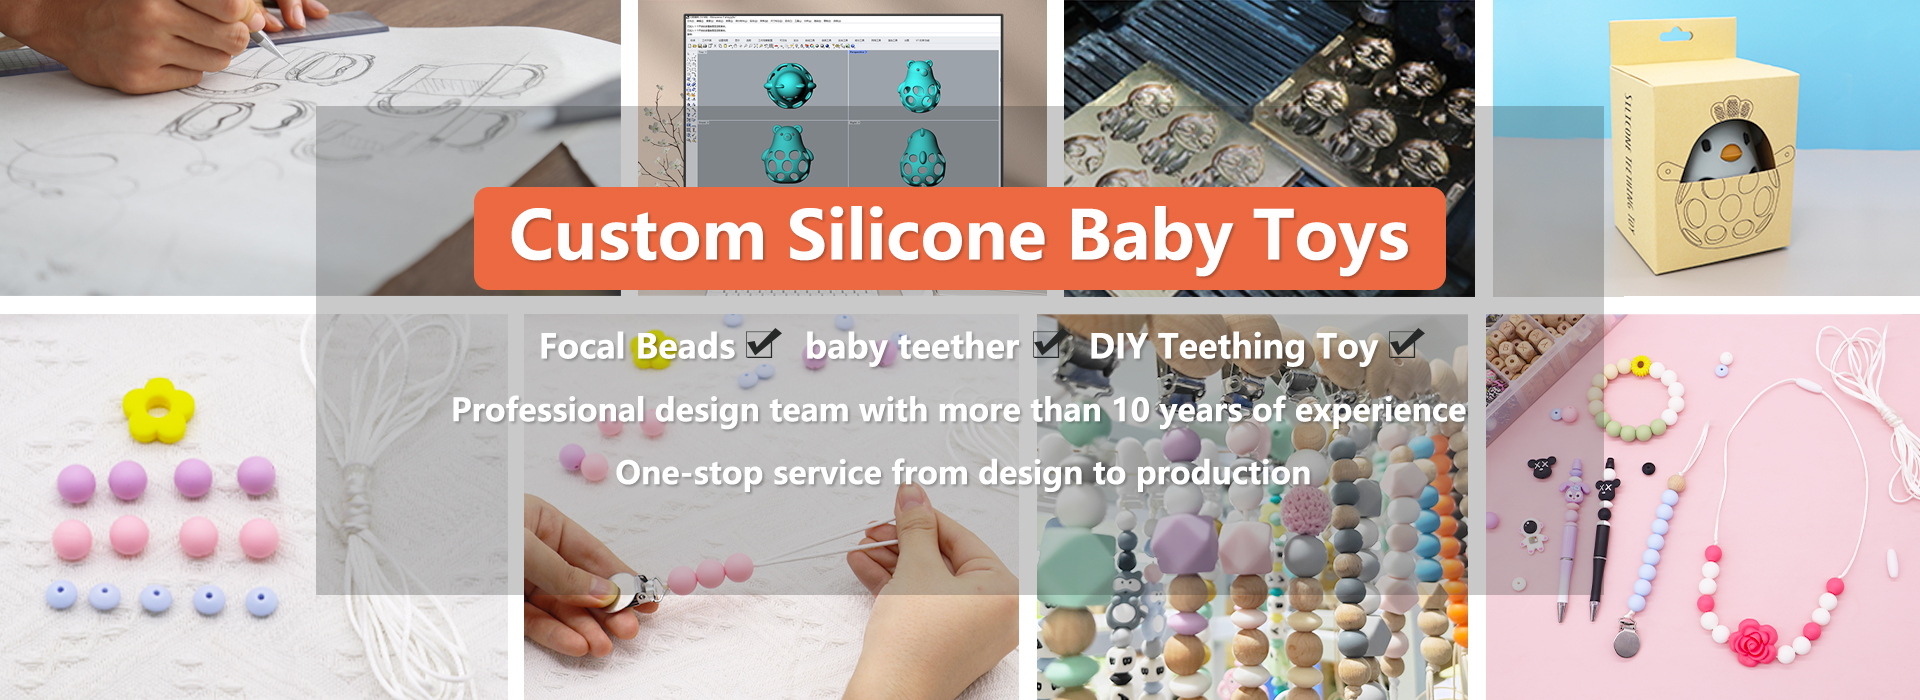 custom silicone baby toy